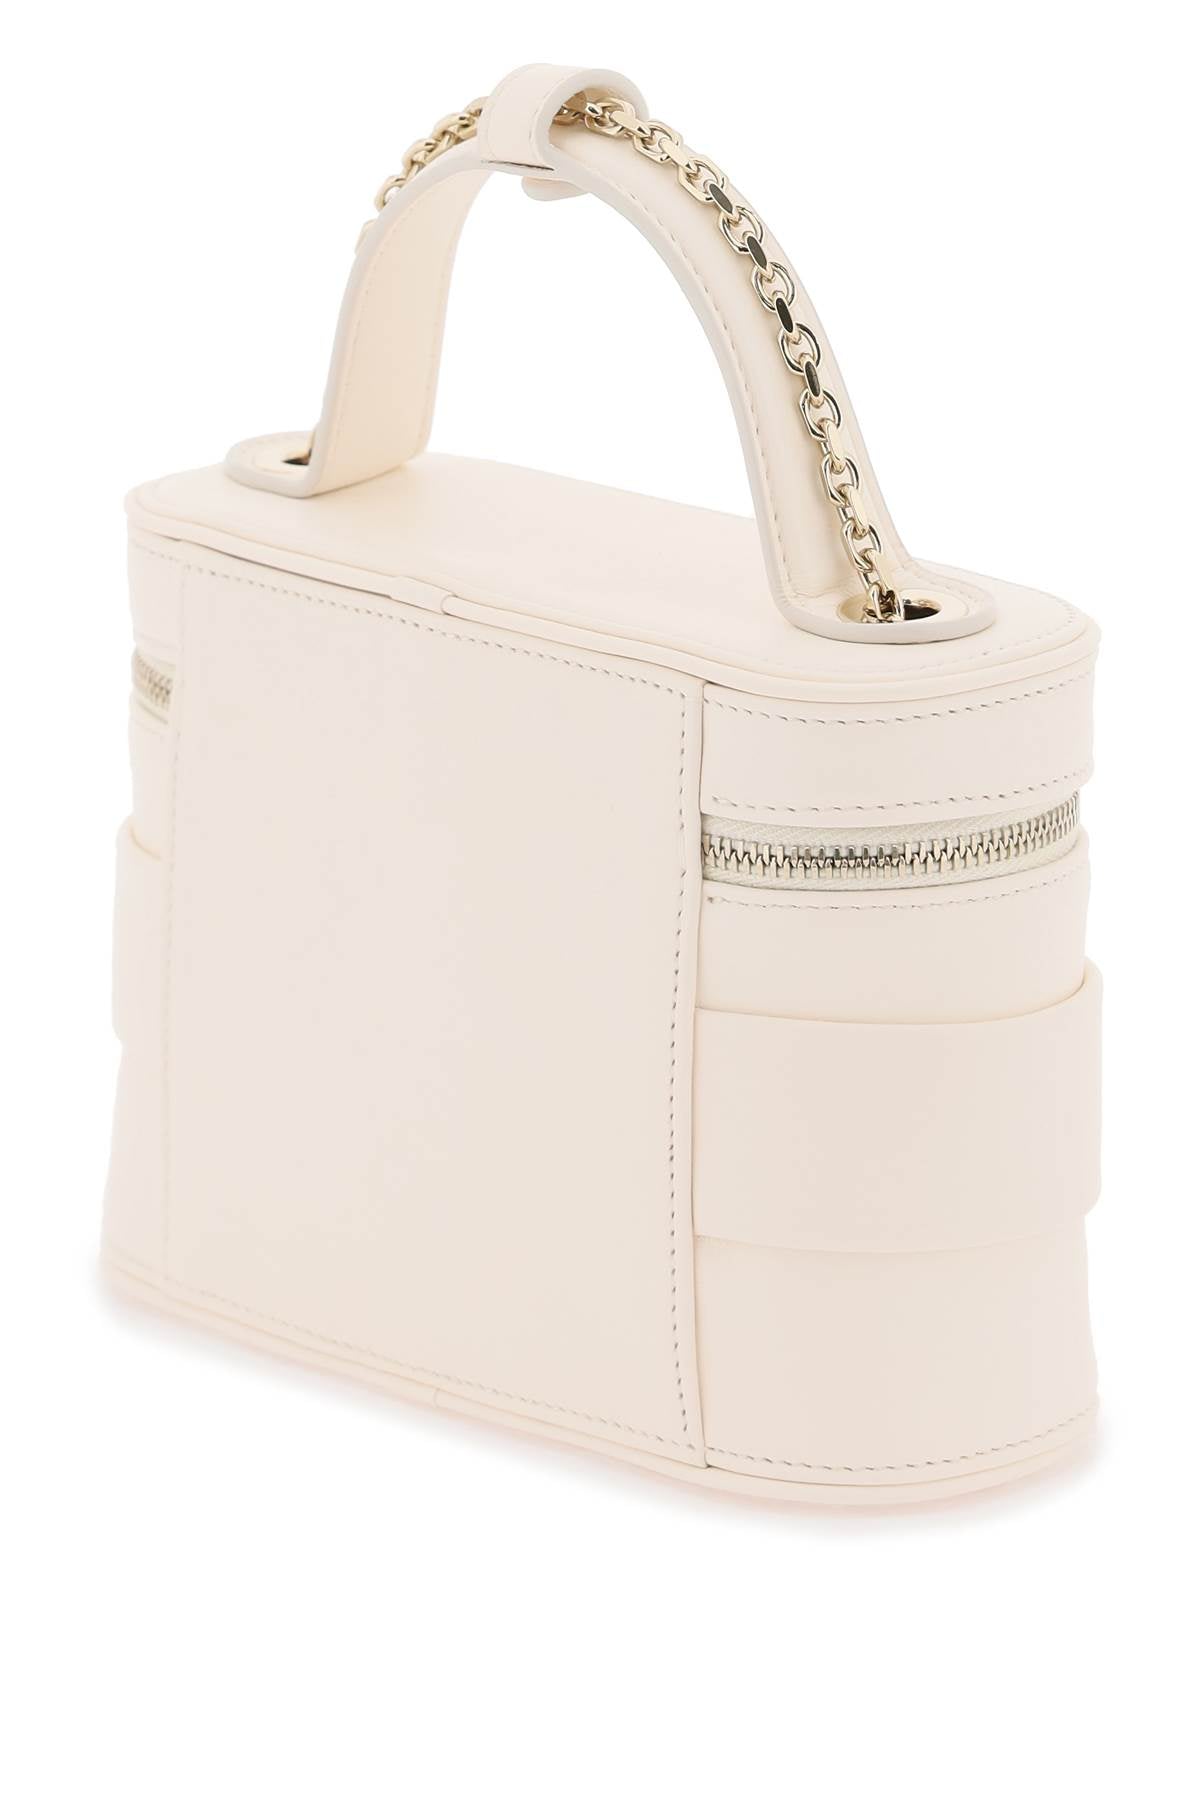 WHITE RHINESTONE Micro Handbag with Chain Shoulder by Roger Vivier